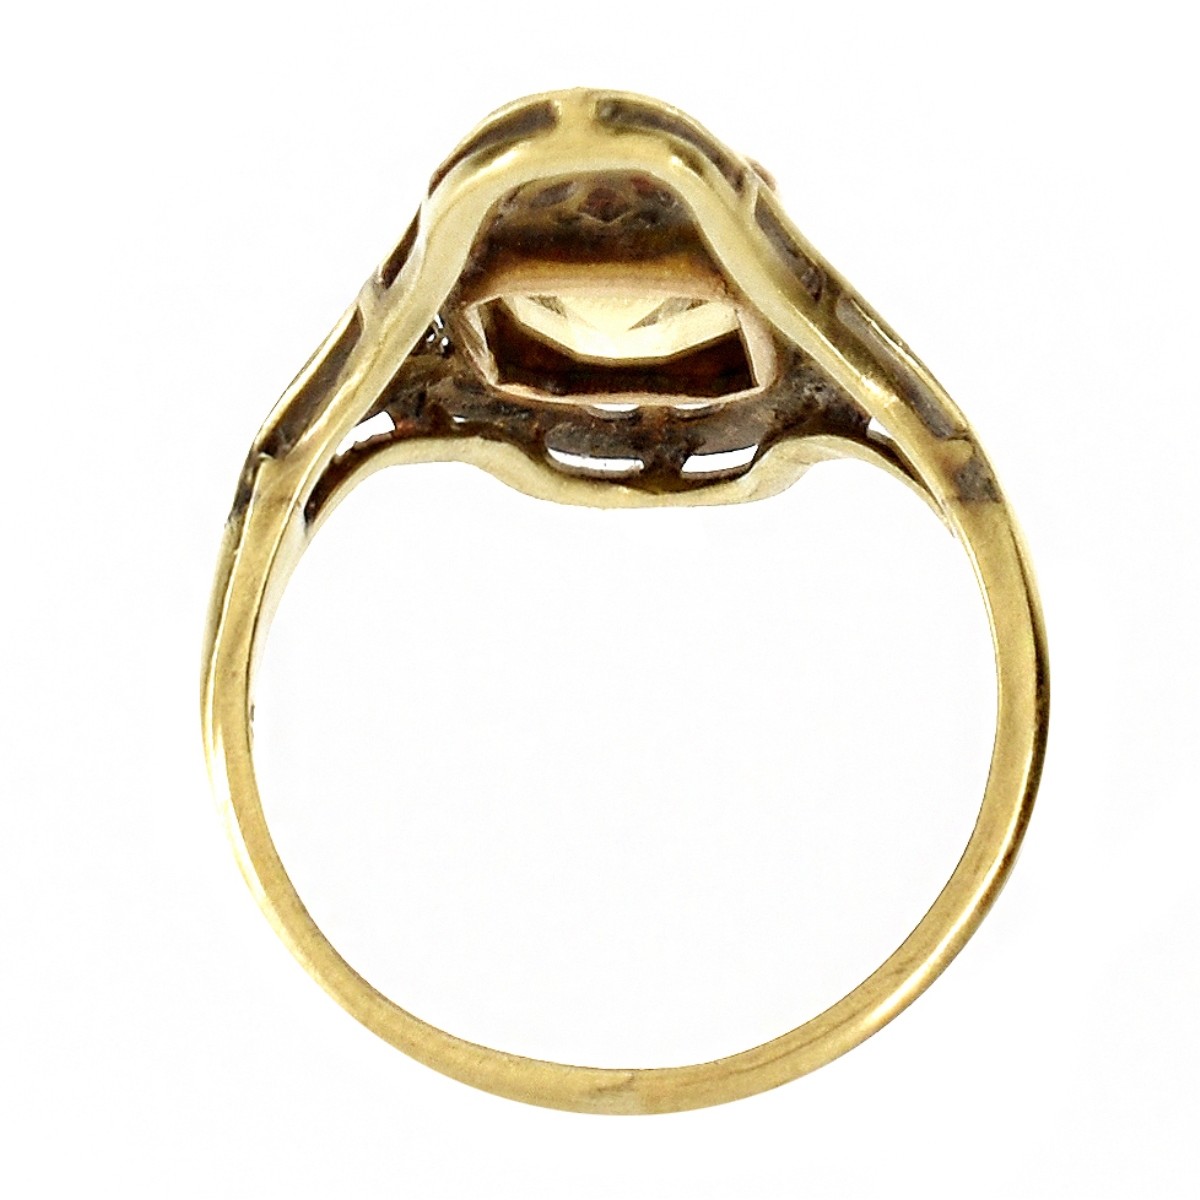 Art Nouveau 10K and Citrine Ring